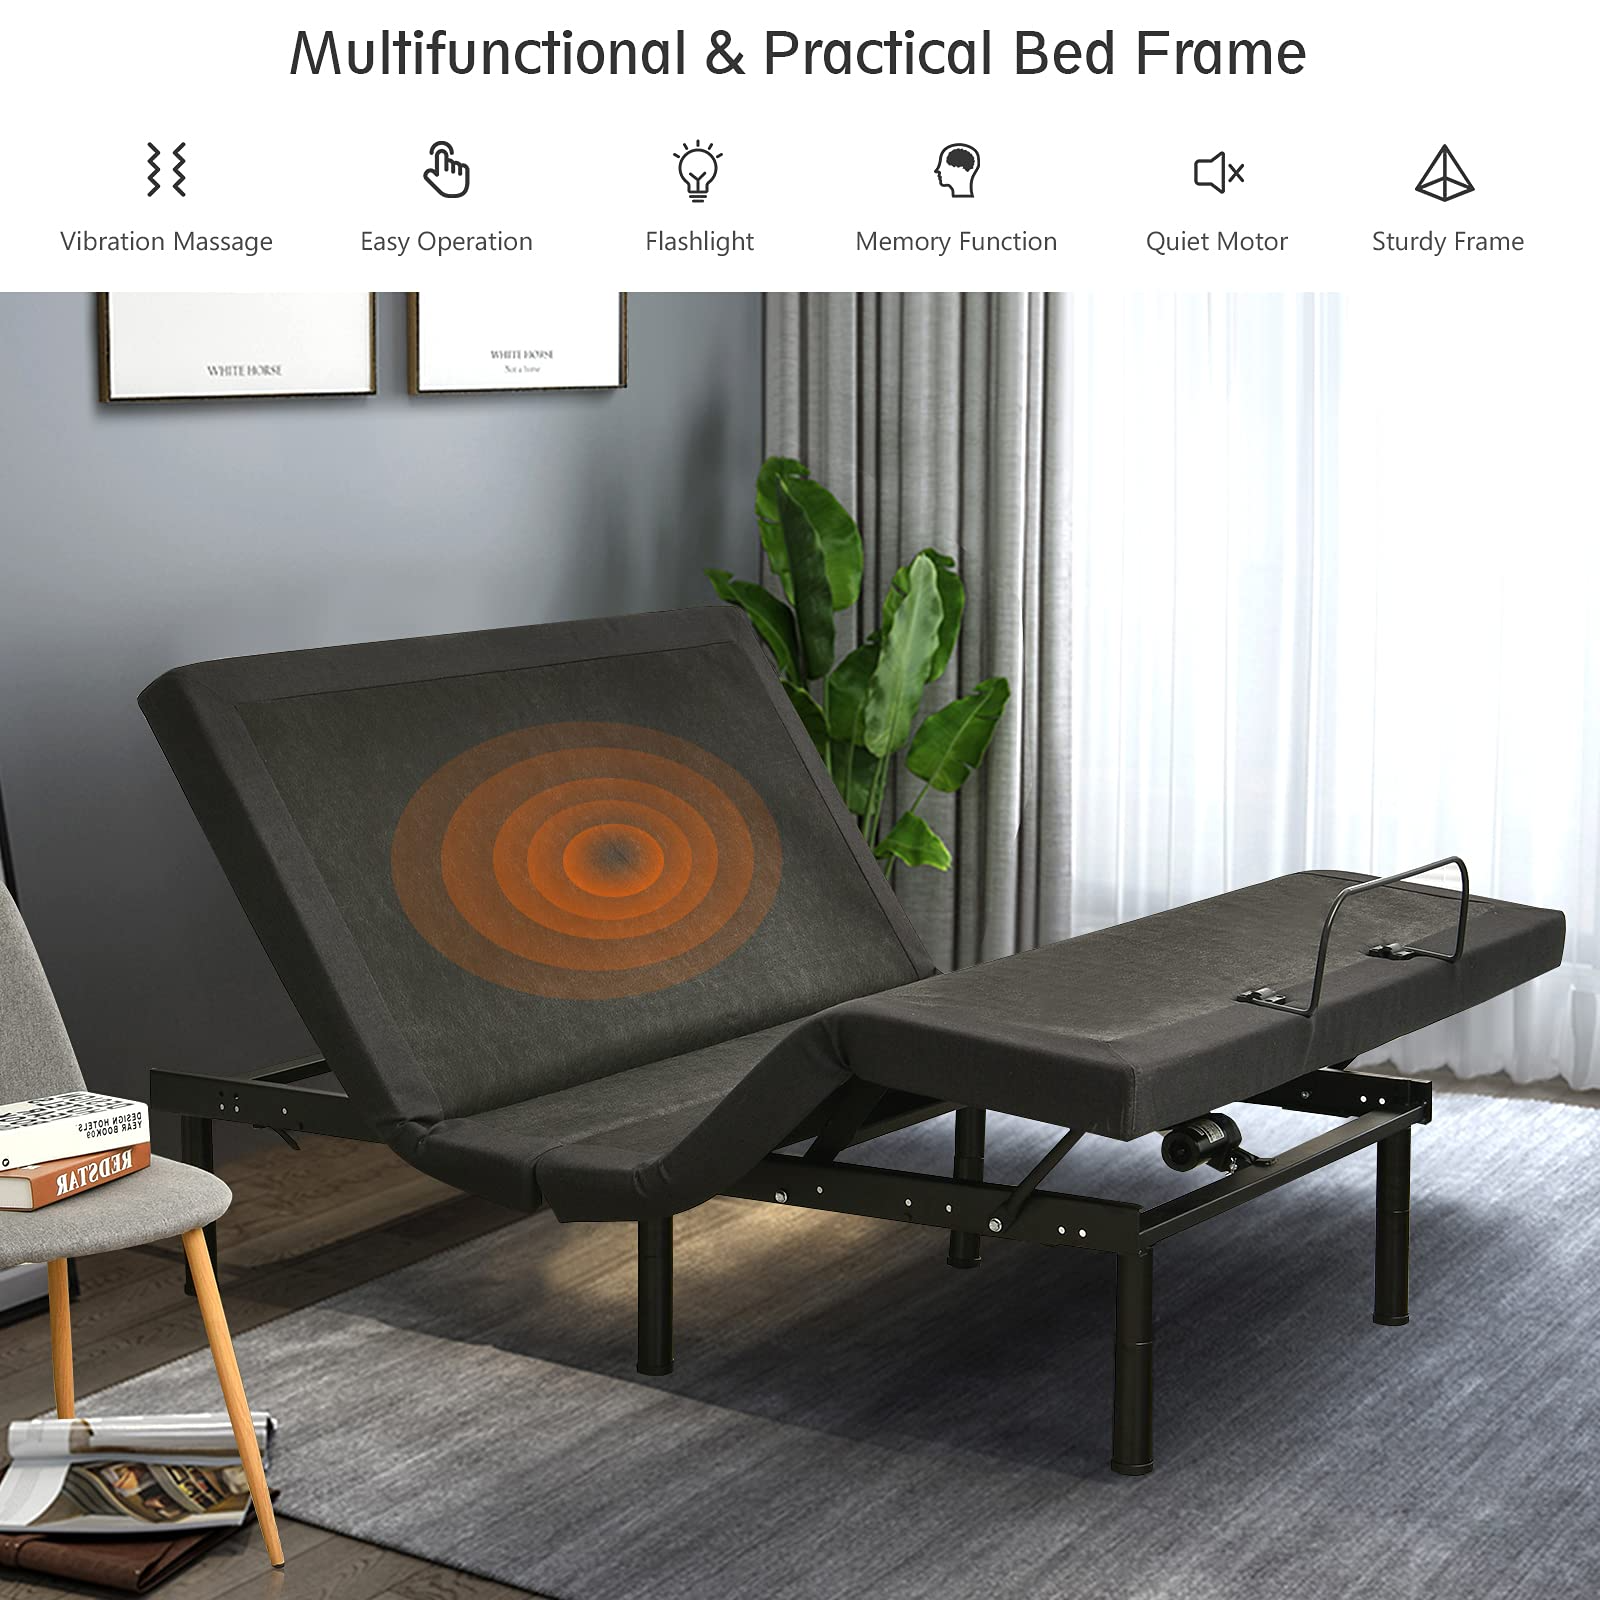 Giantex Adjustable Bed Base with Massage, Wireless Zero Gravity Bed Base Frame